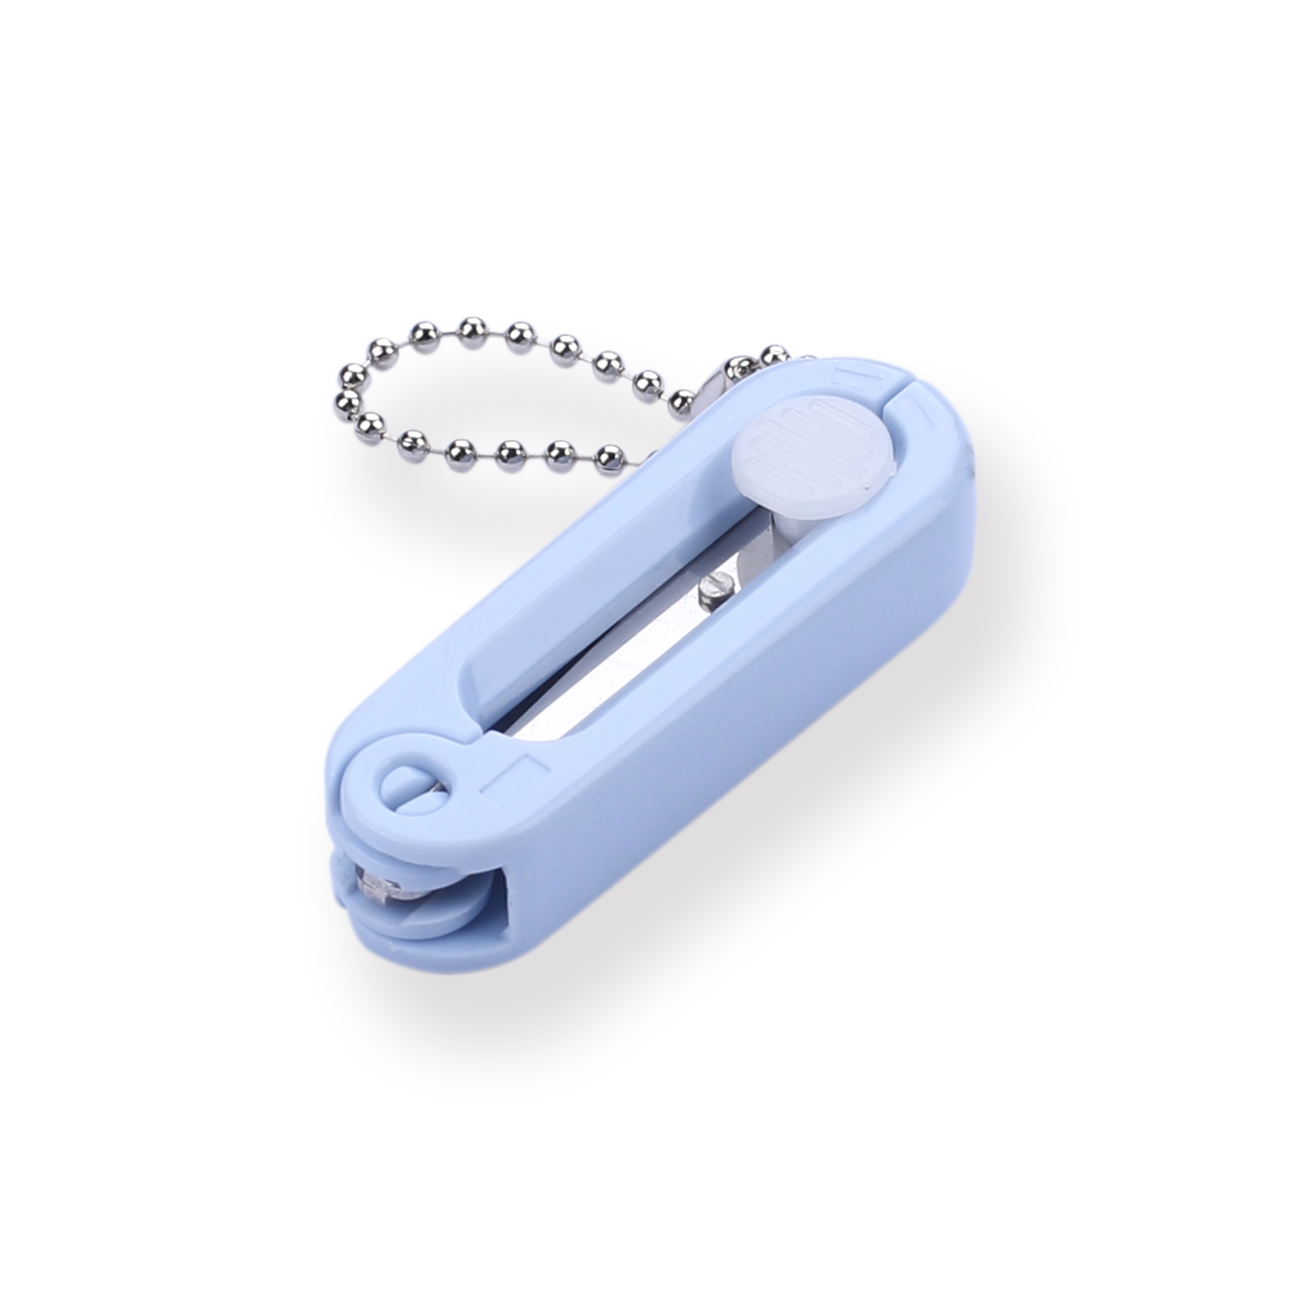 Mini Retractable Scissors - Blue — Stationery Pal